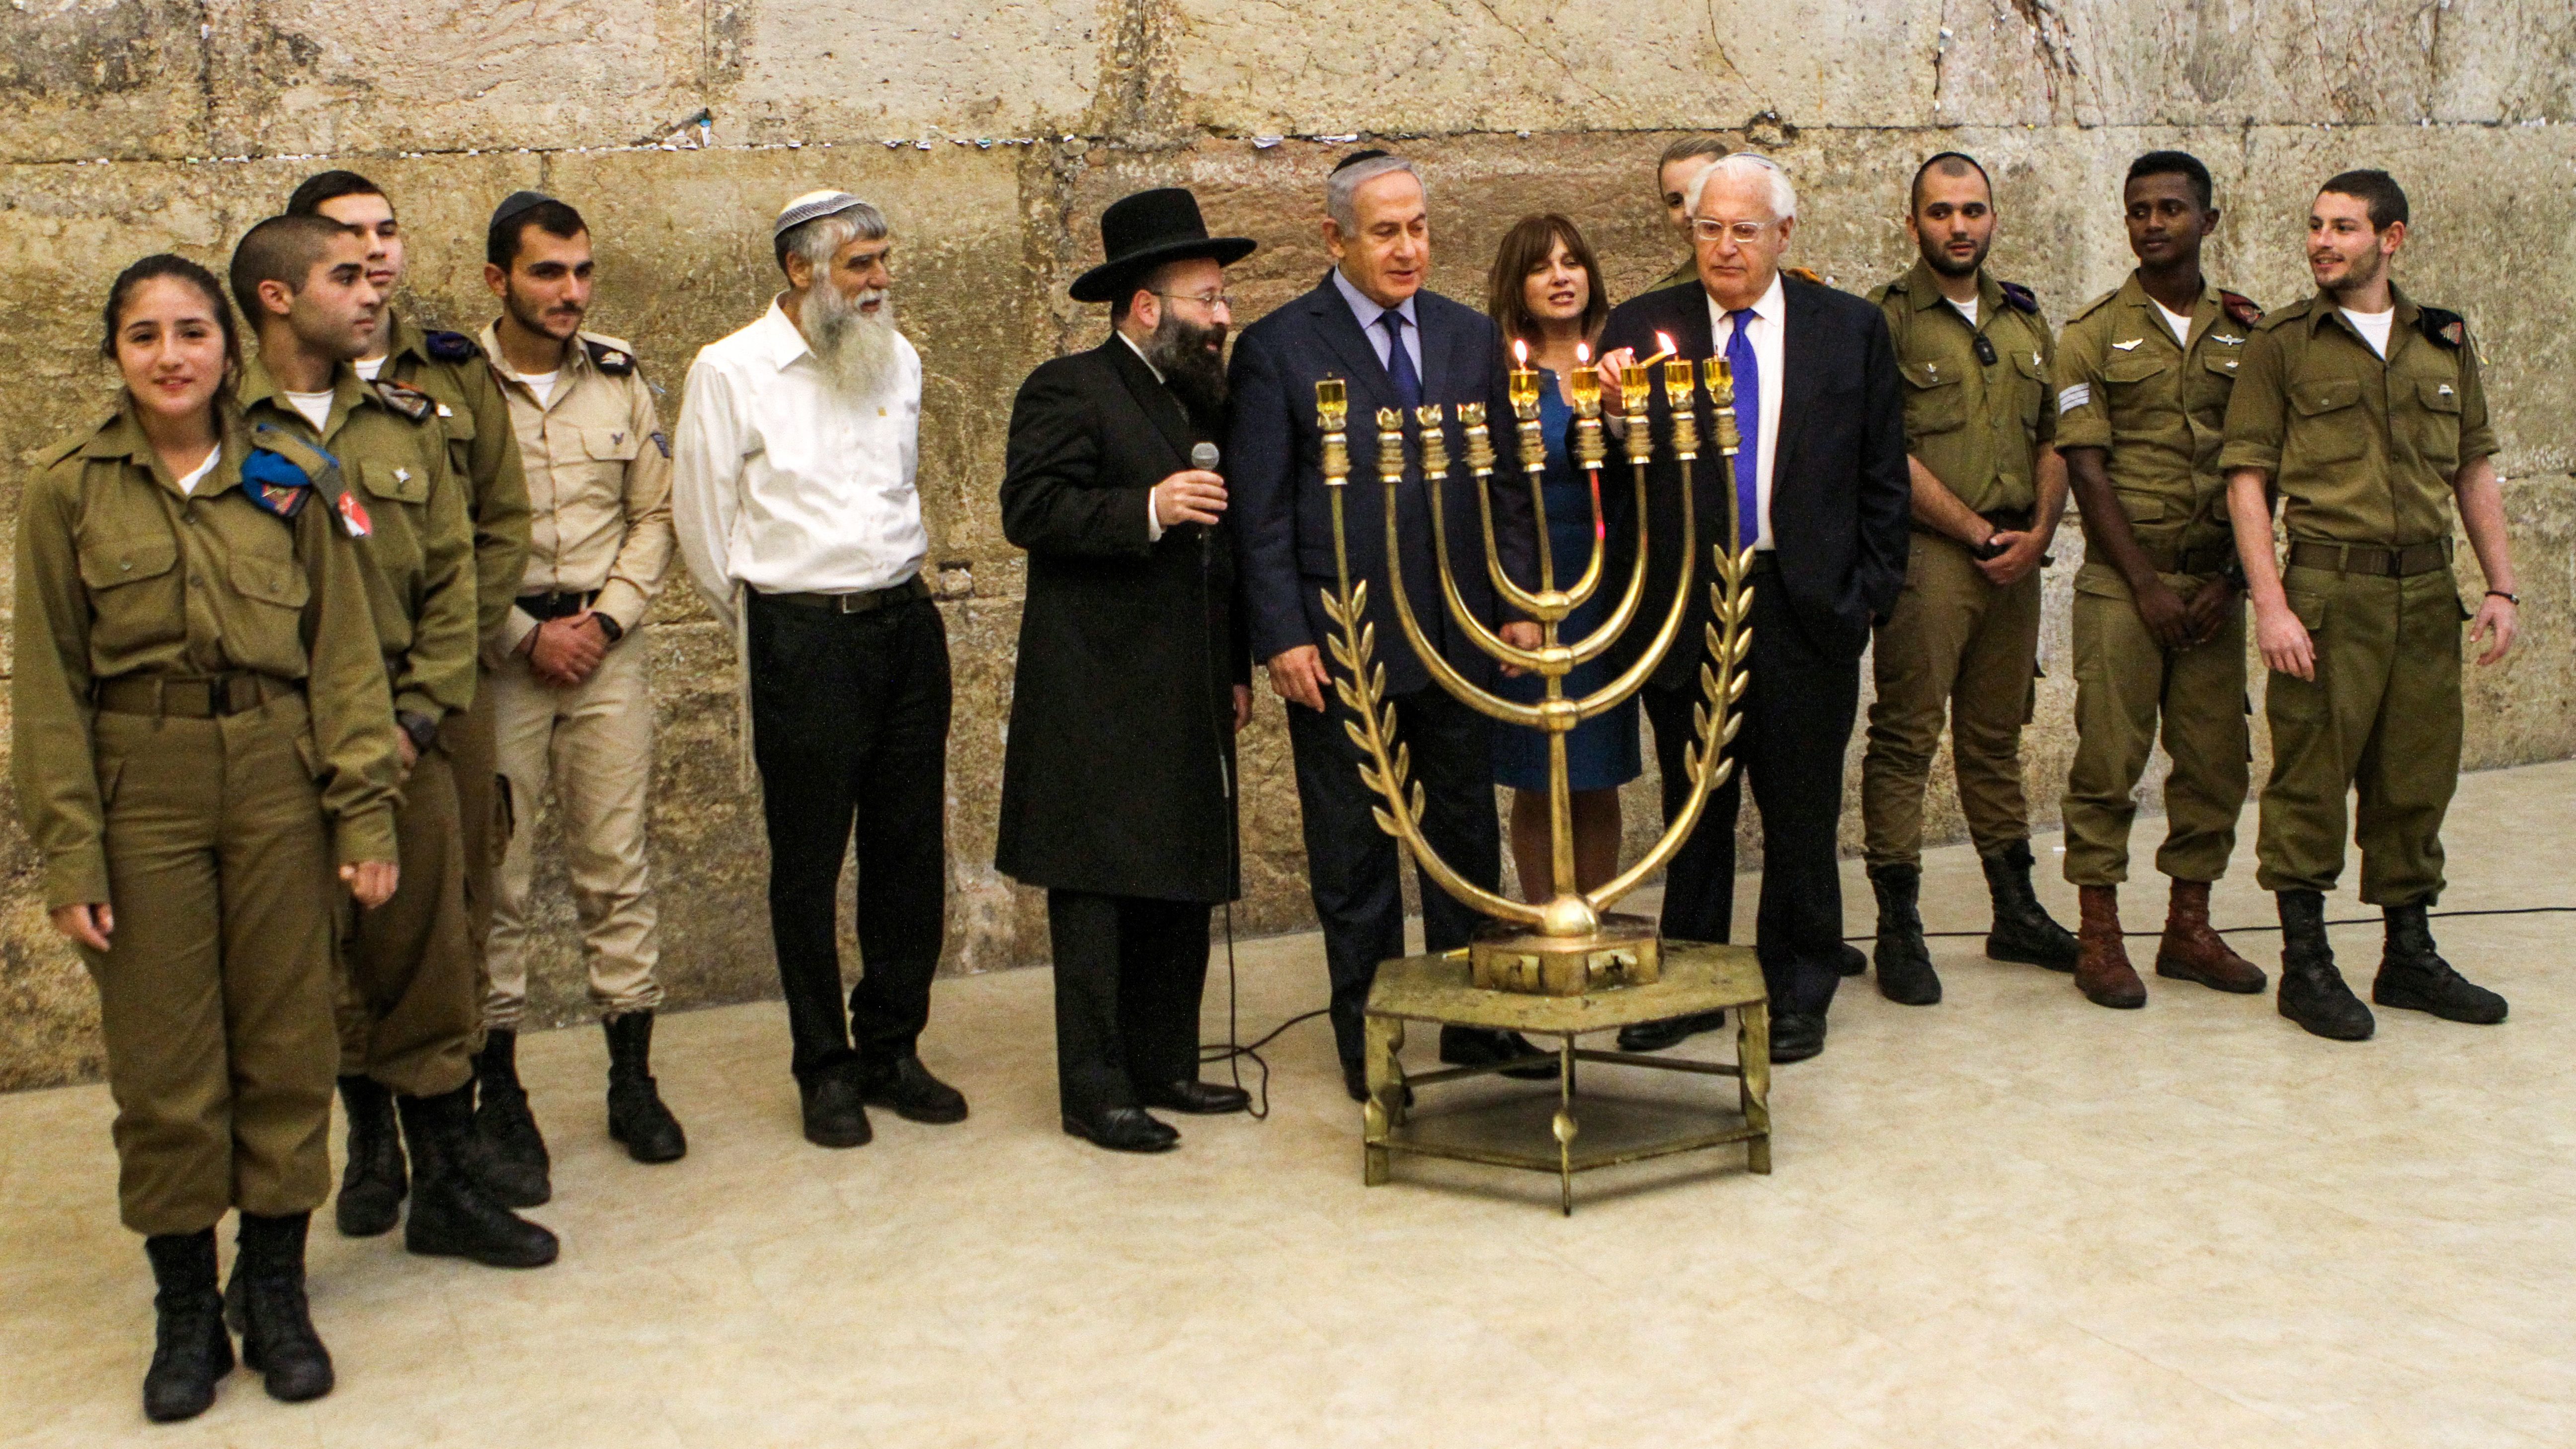 Hanukkah: Colonial Zionist Ritual, Not Jewish Religious Celebration